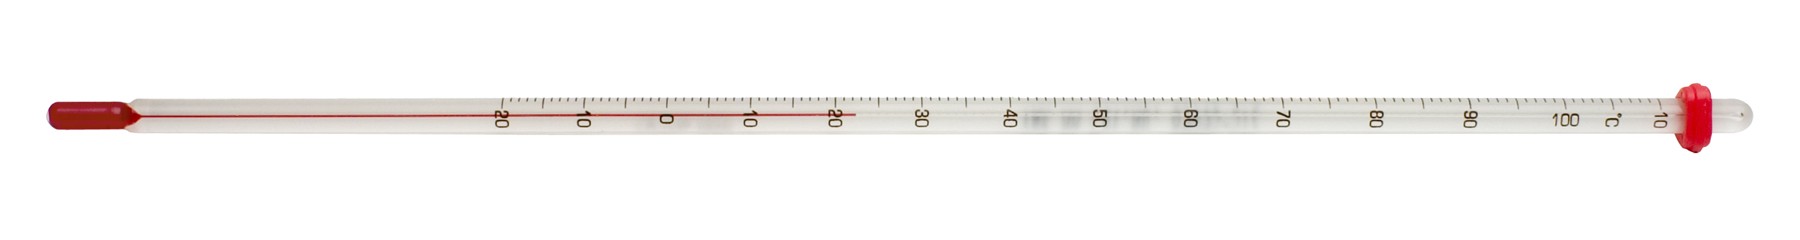 SP Bel-Art, H-B DURAC General Purpose Liquid-In-Glass Laboratory Thermometer; -35 to 50C, 76mm Immersion, Organic Liquid Fill